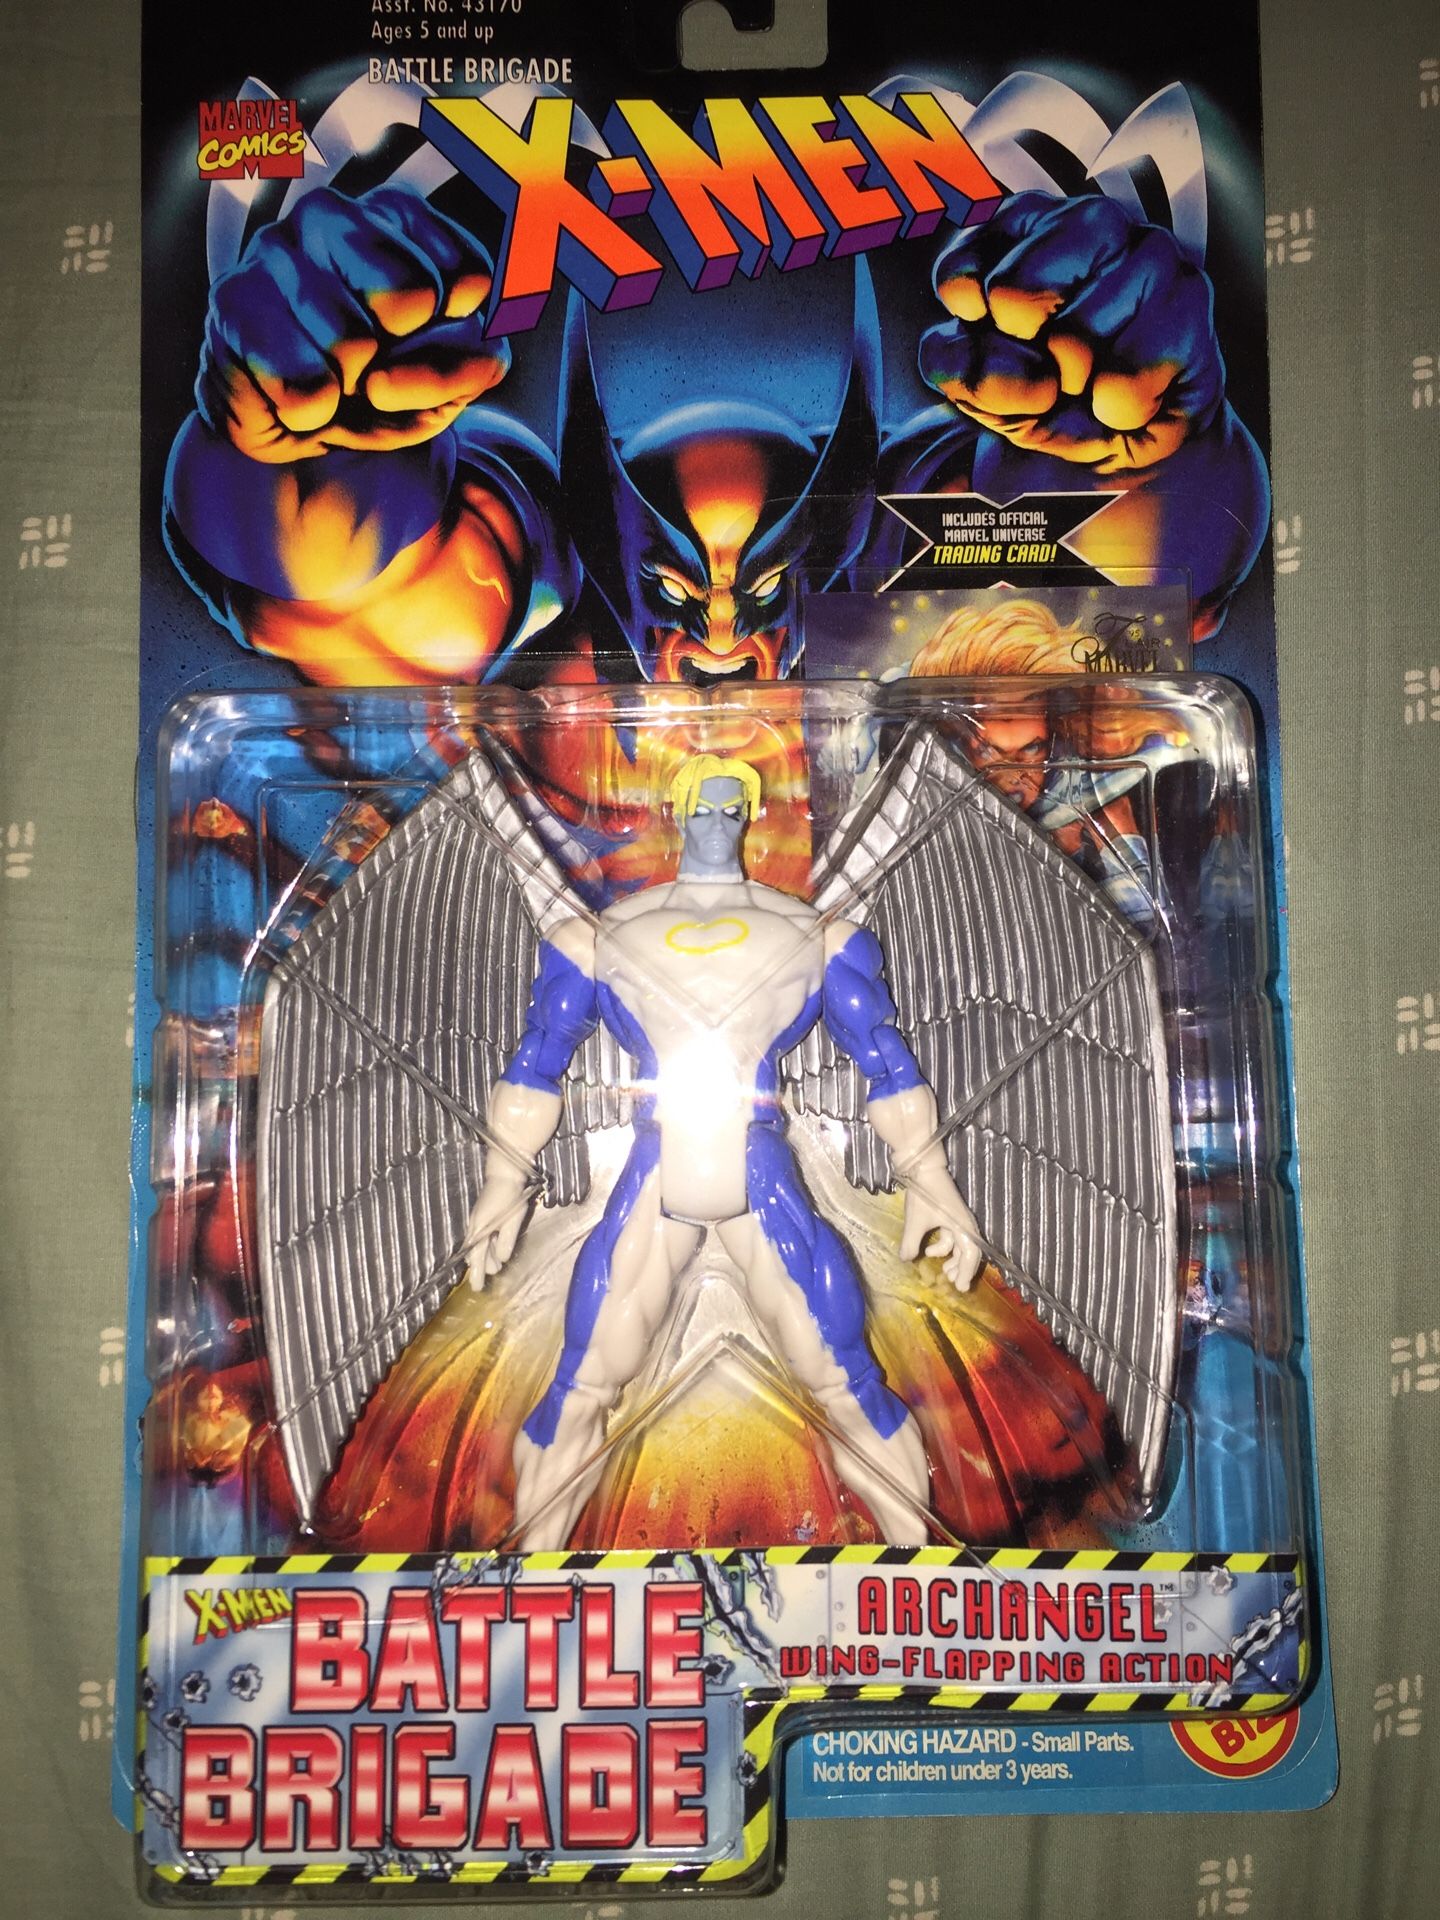 Archangel X-Men battle brigade action figure